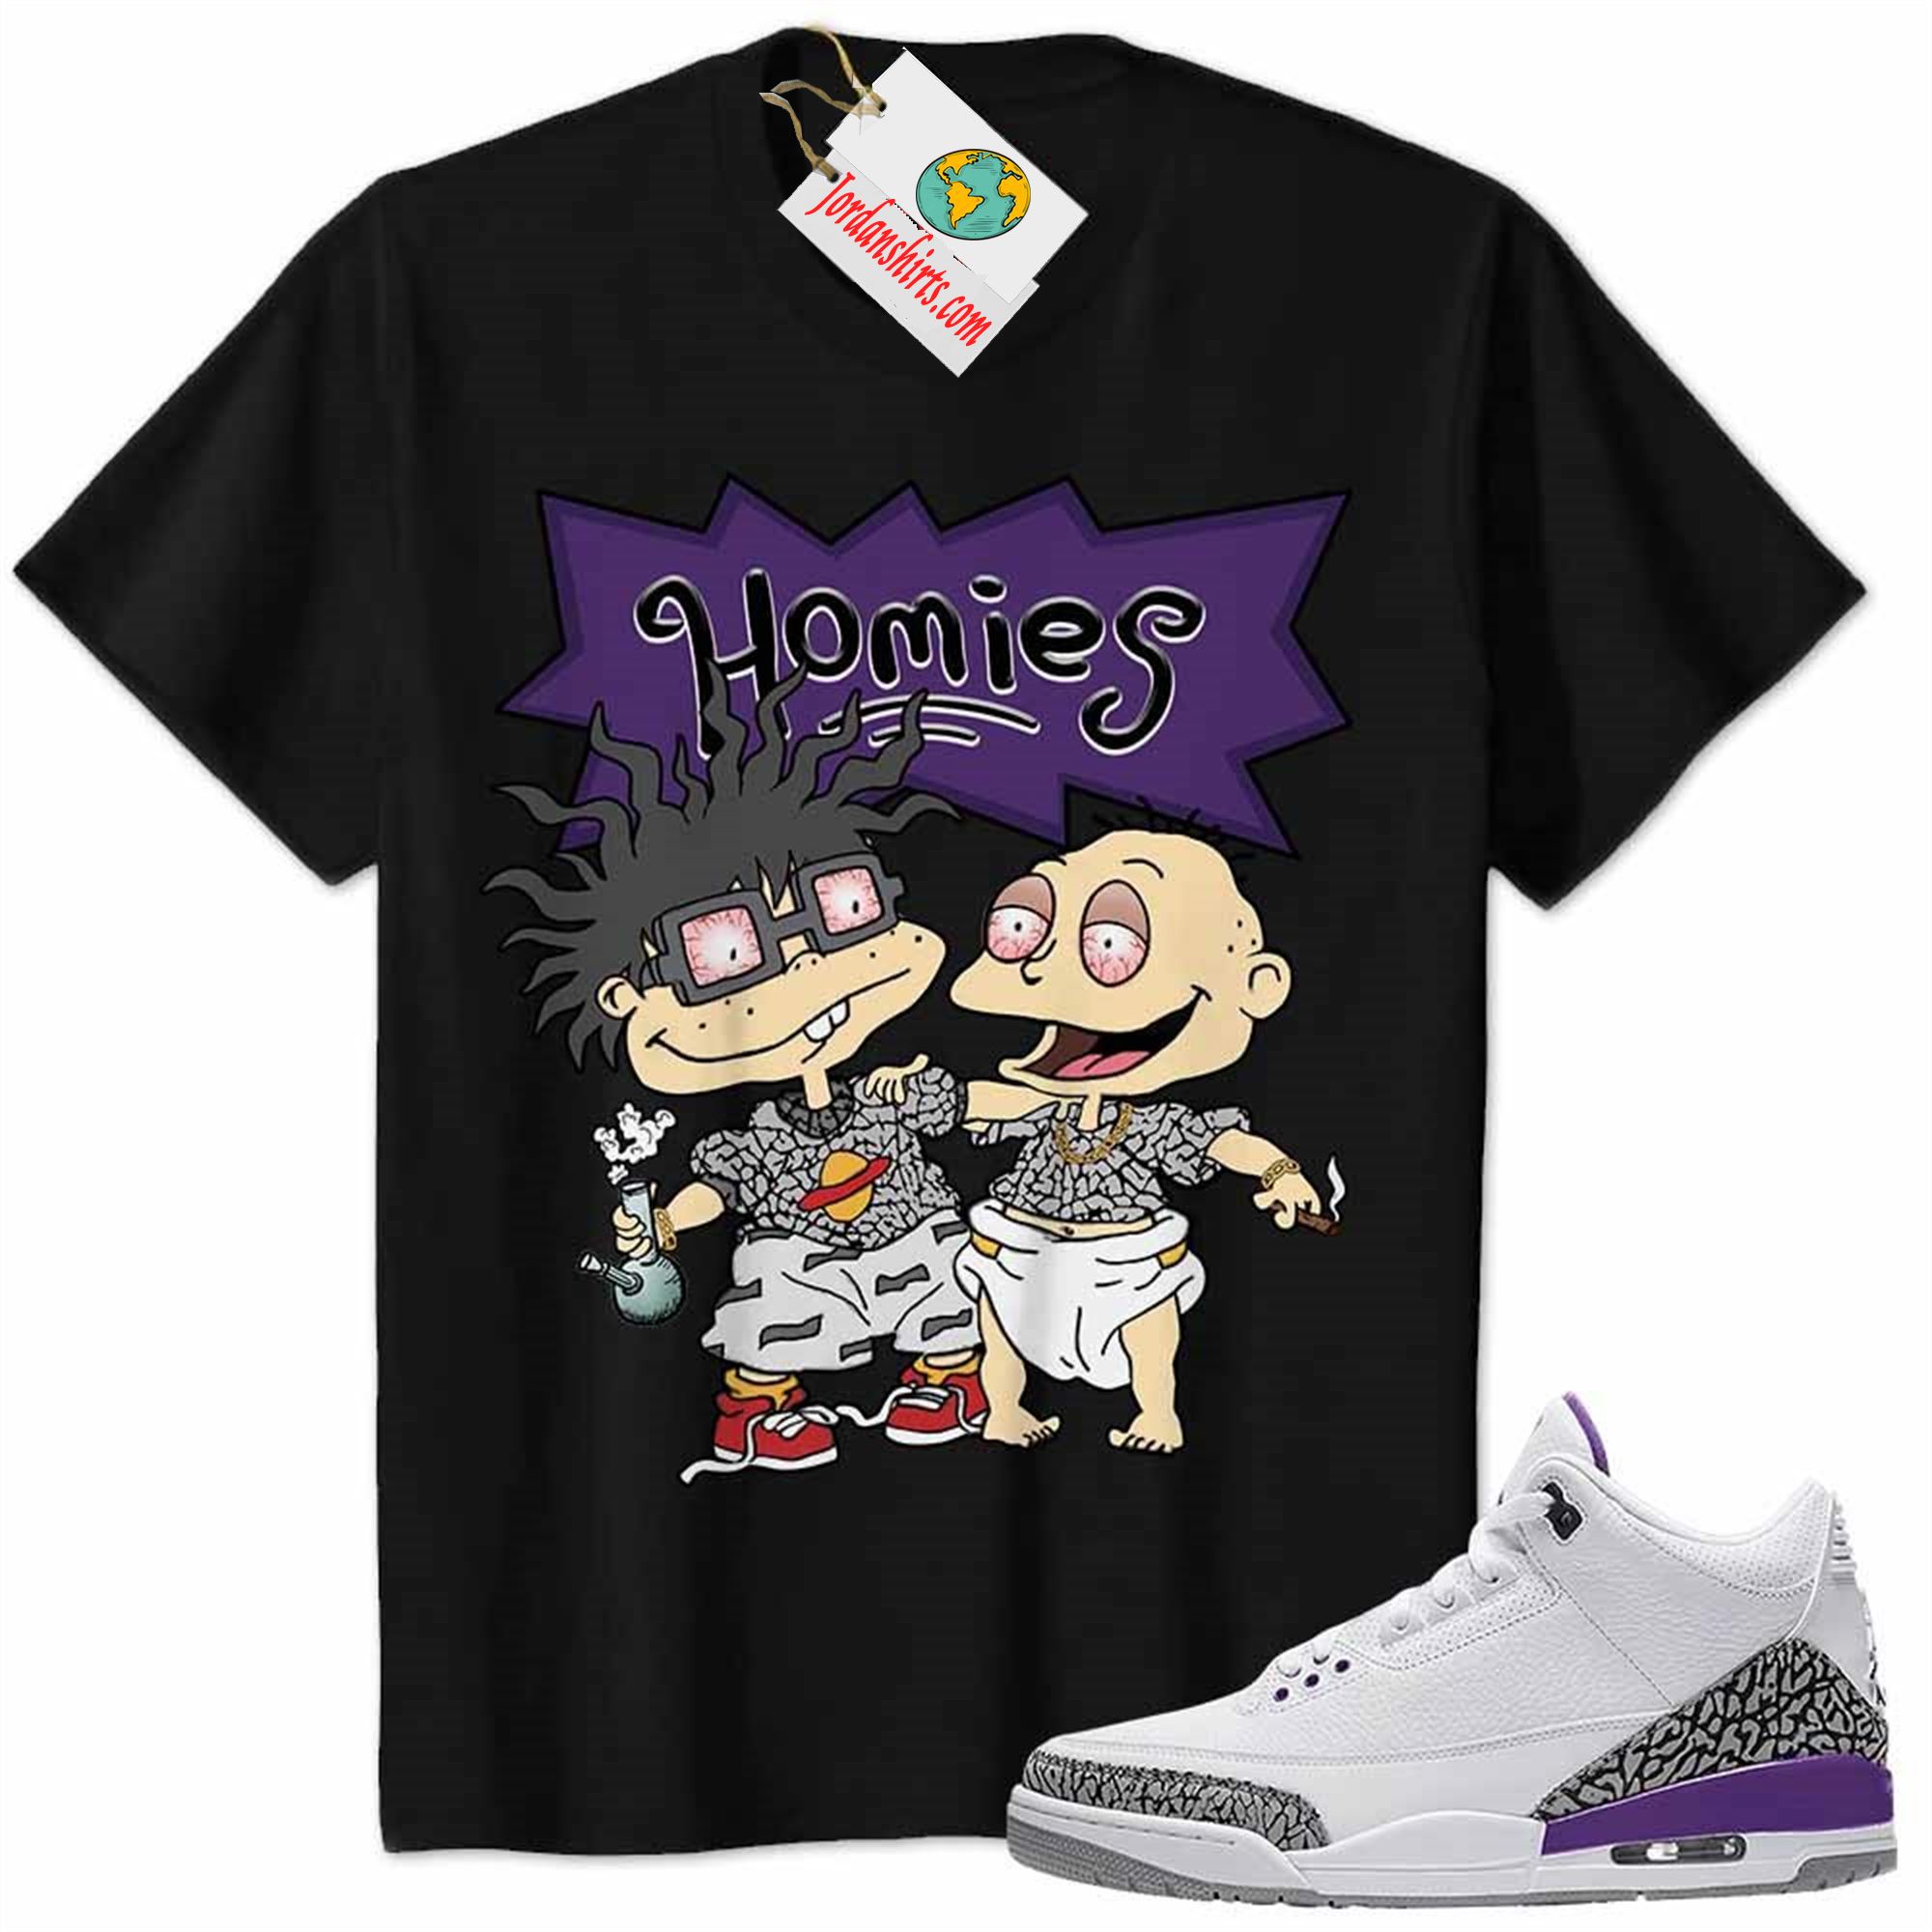 Jordan 3 Shirt, Jordan 3 Wmns Dark Iris Violet Ore Shirt Hommies Tommy Pickles Chuckie Finster Rugrats Black Size Up To 5xl